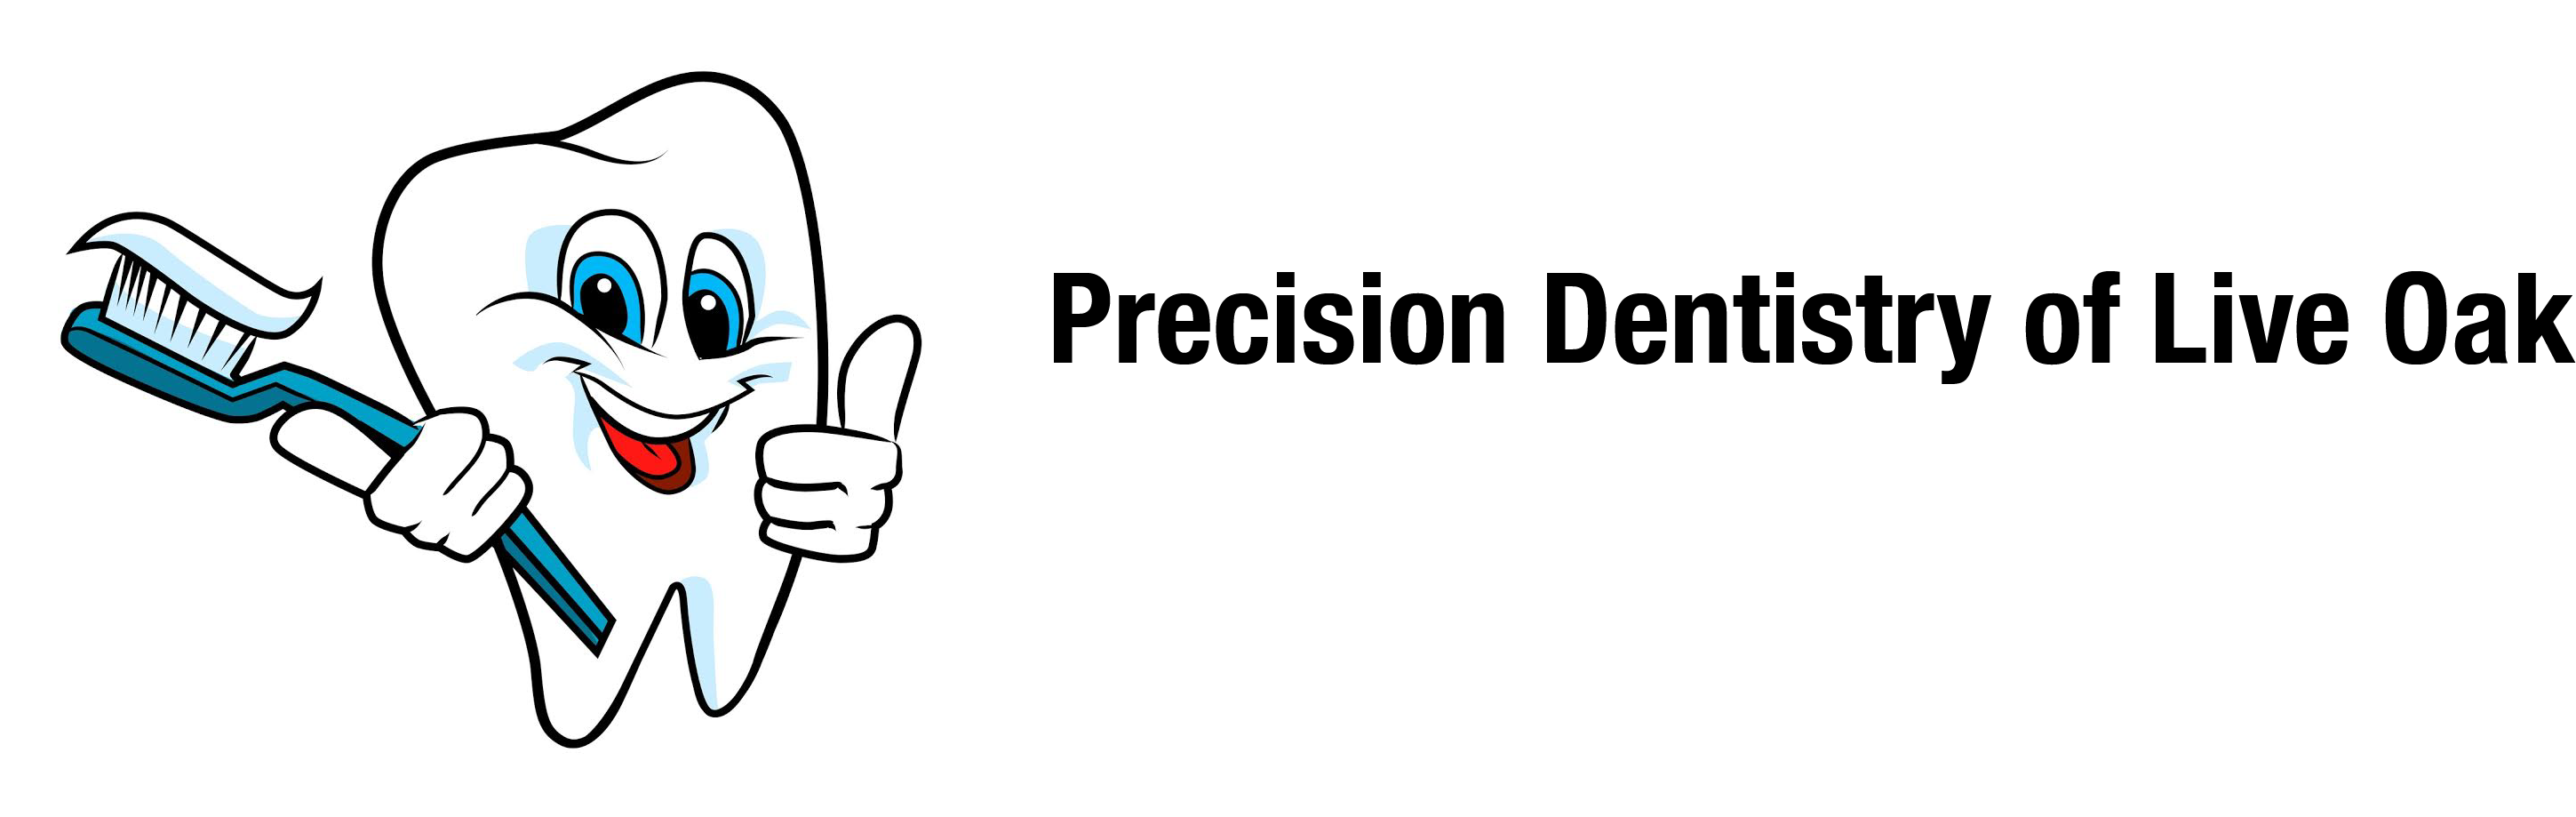 Precision Dentistry of Live Oak